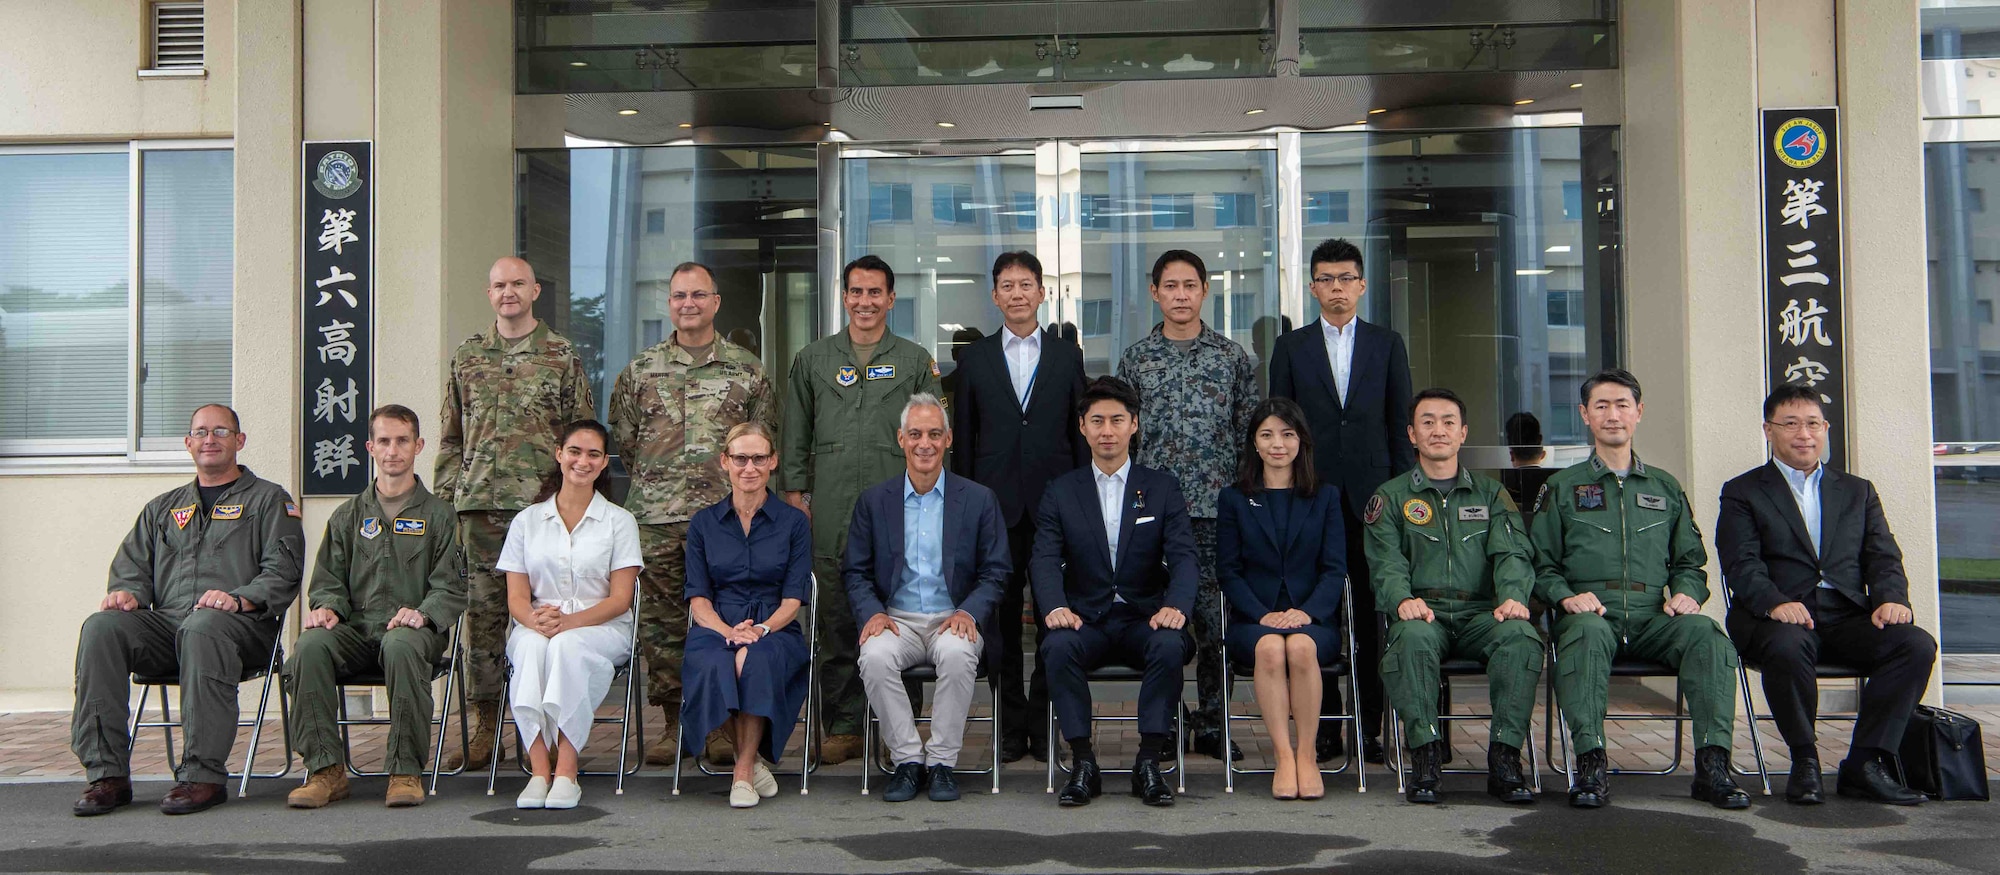 Rahm Emanuel, U.S. Ambassador to Japan, poses for a photo with local leadership during the ambassador’s visit at Misawa Air Base, Japan, July 22, 2022.